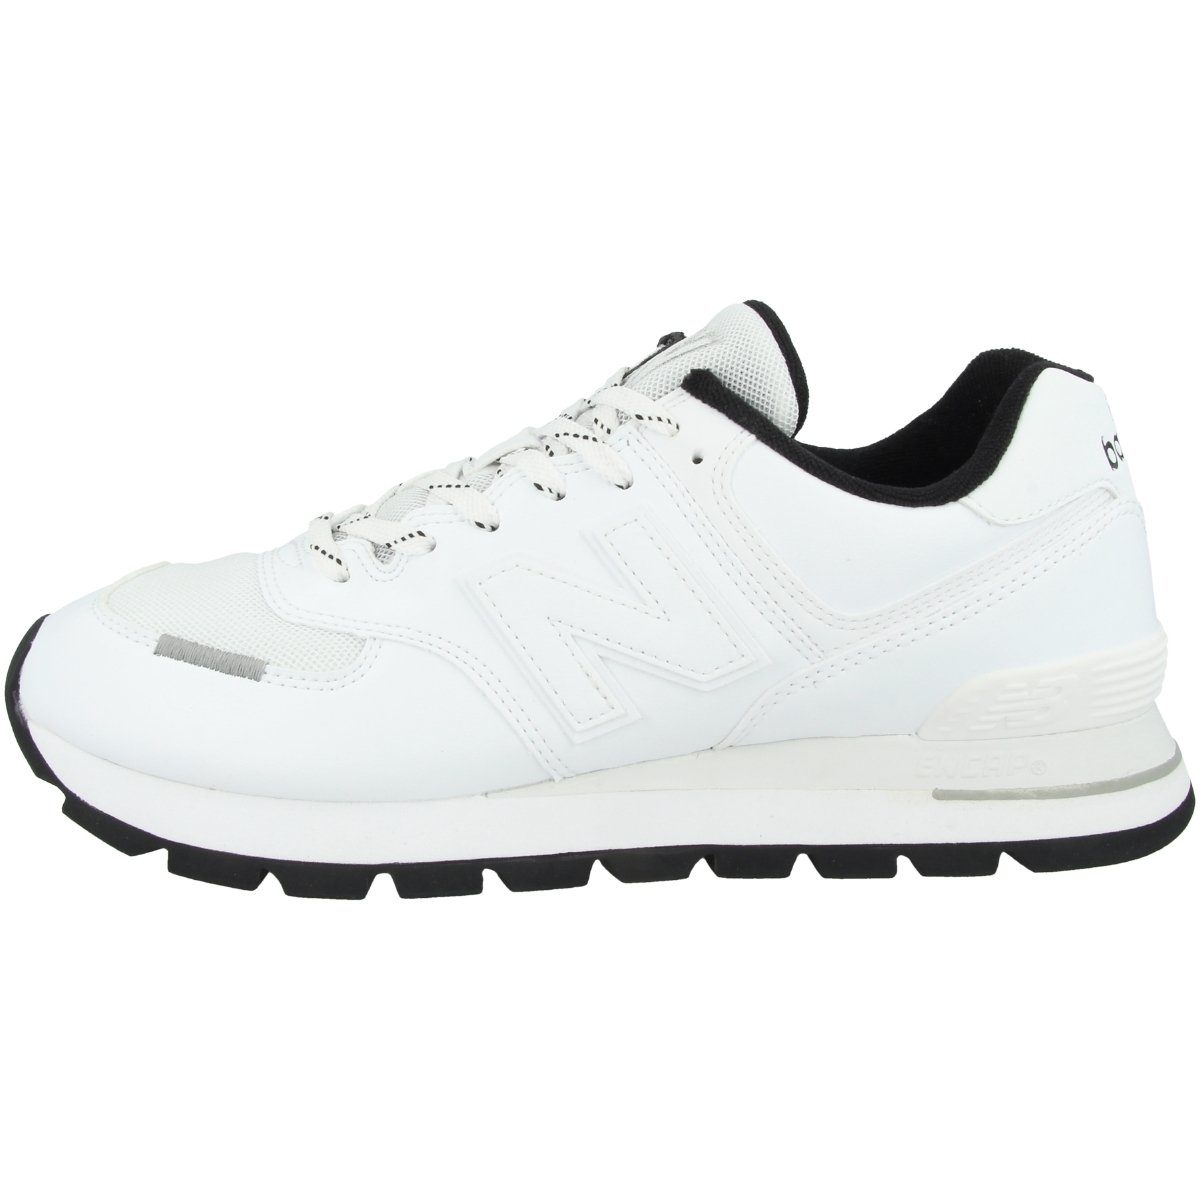 New ML574 Herren Sneaker online kaufen | OTTO